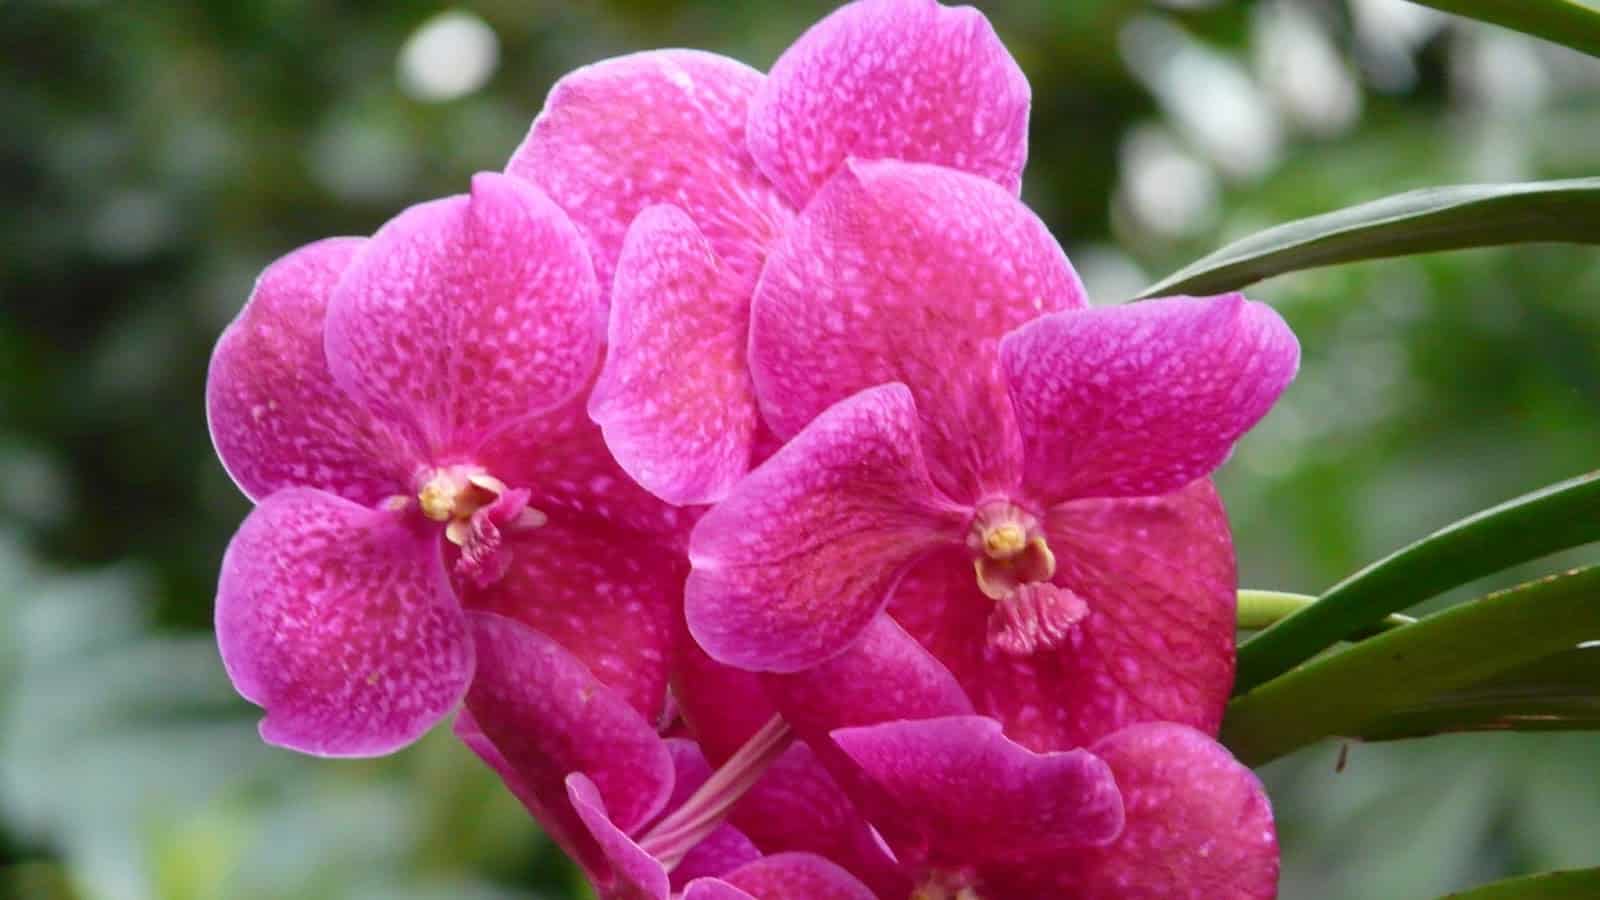 A orquídea Vanda impressiona pelo colorido vibrante de suas flores.